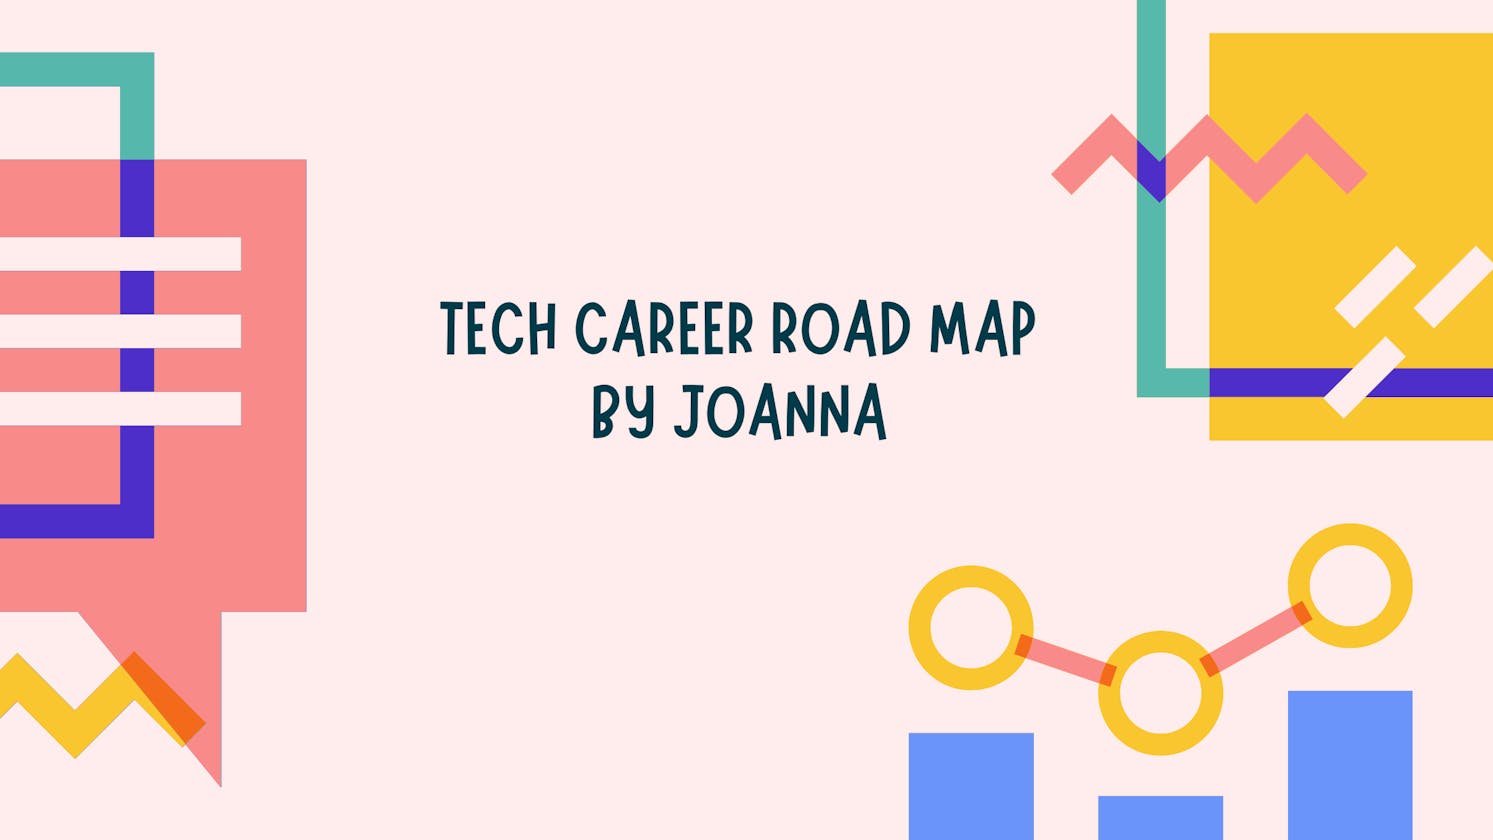 Designing a tech career Road map